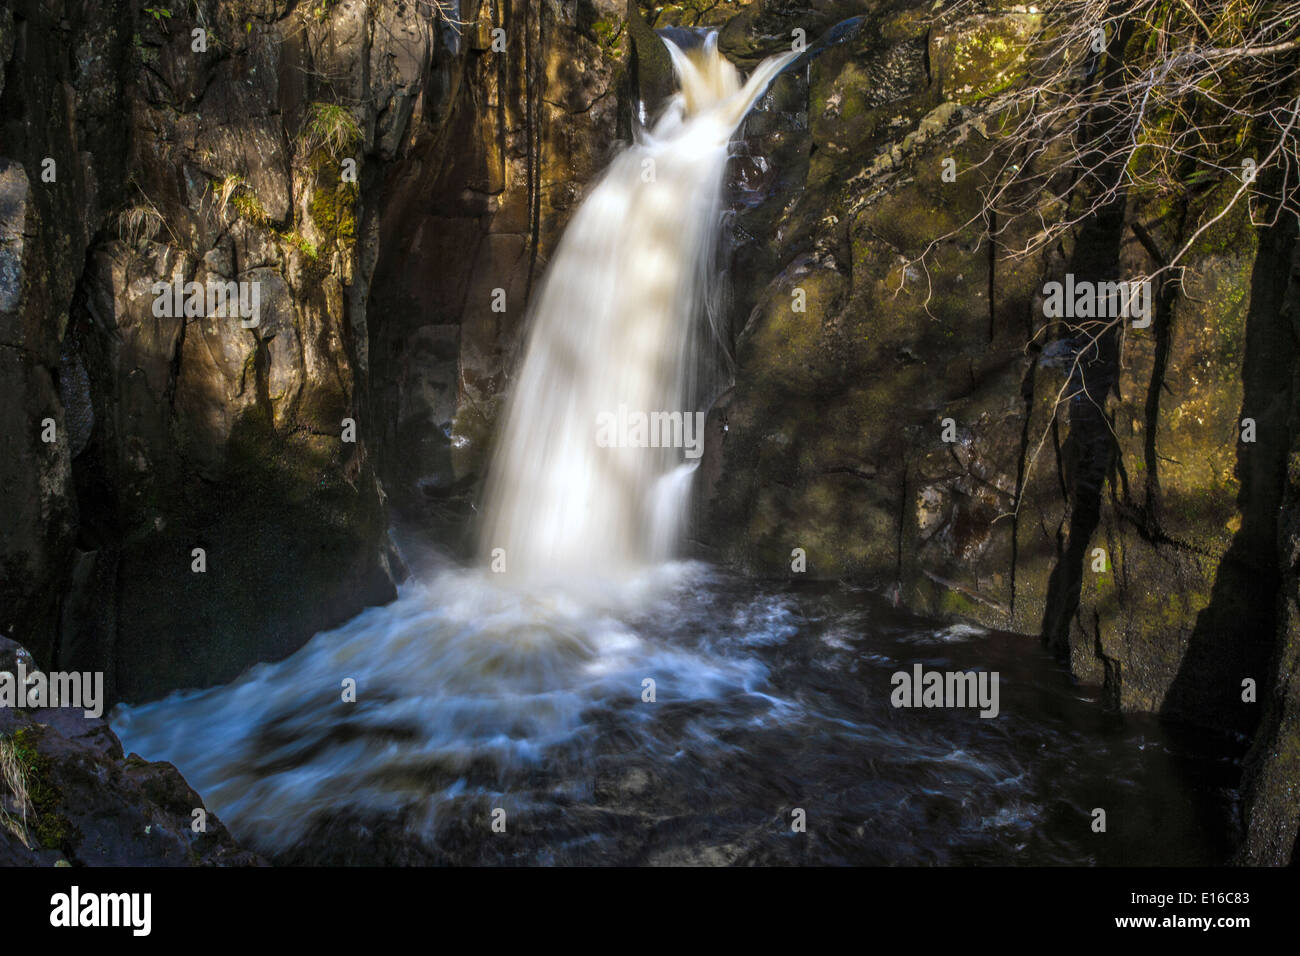 Hollybush Spout Waterfall, taken at Ingleton, North Yorkshire Stock Photo